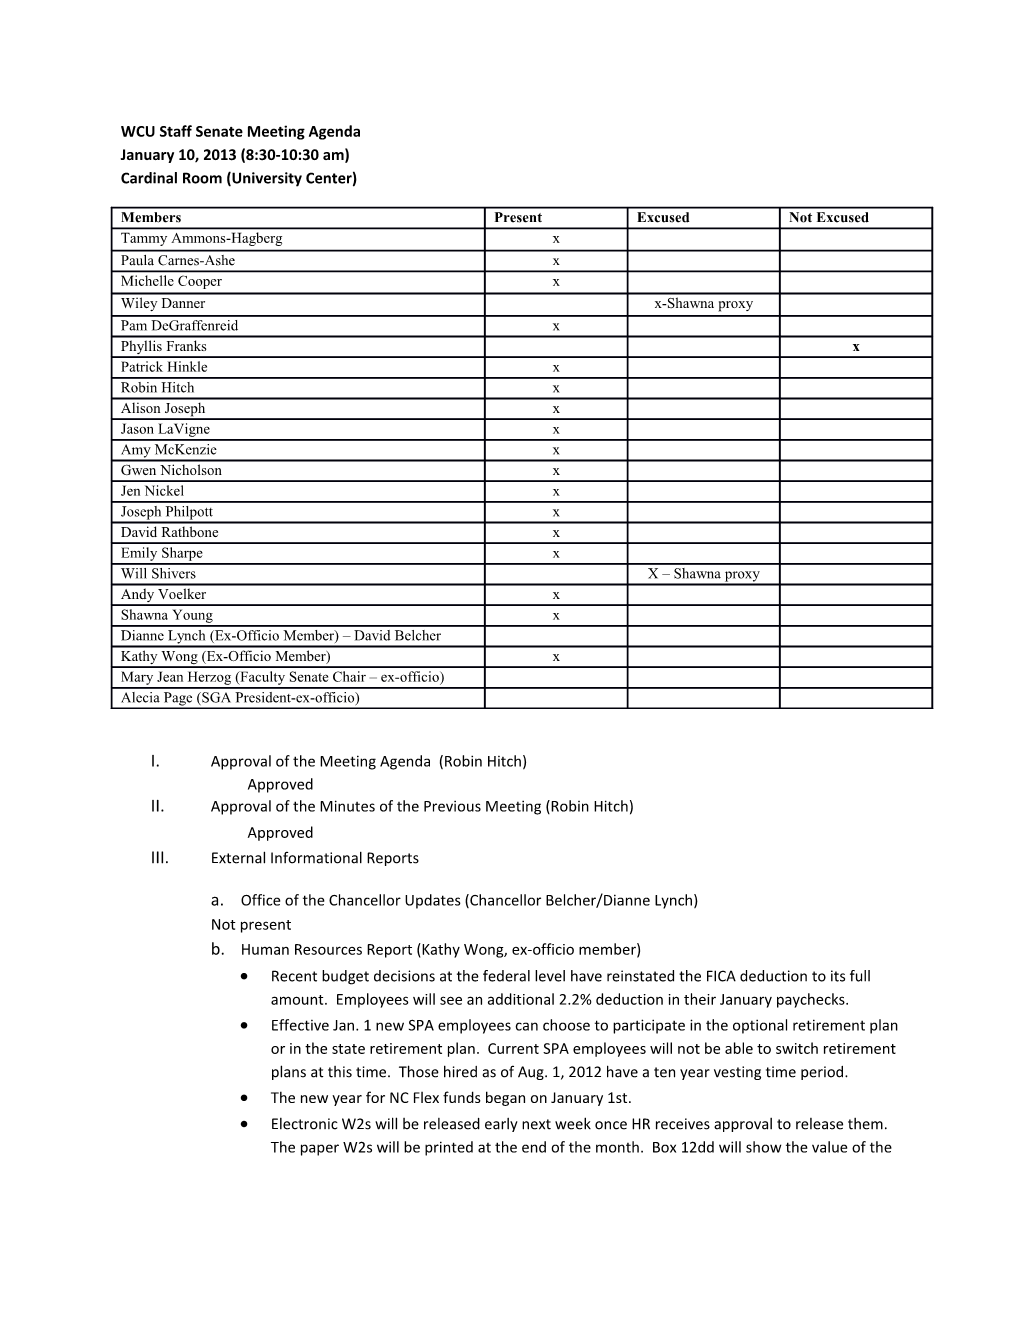 Staff Senate Minutes - January 2013